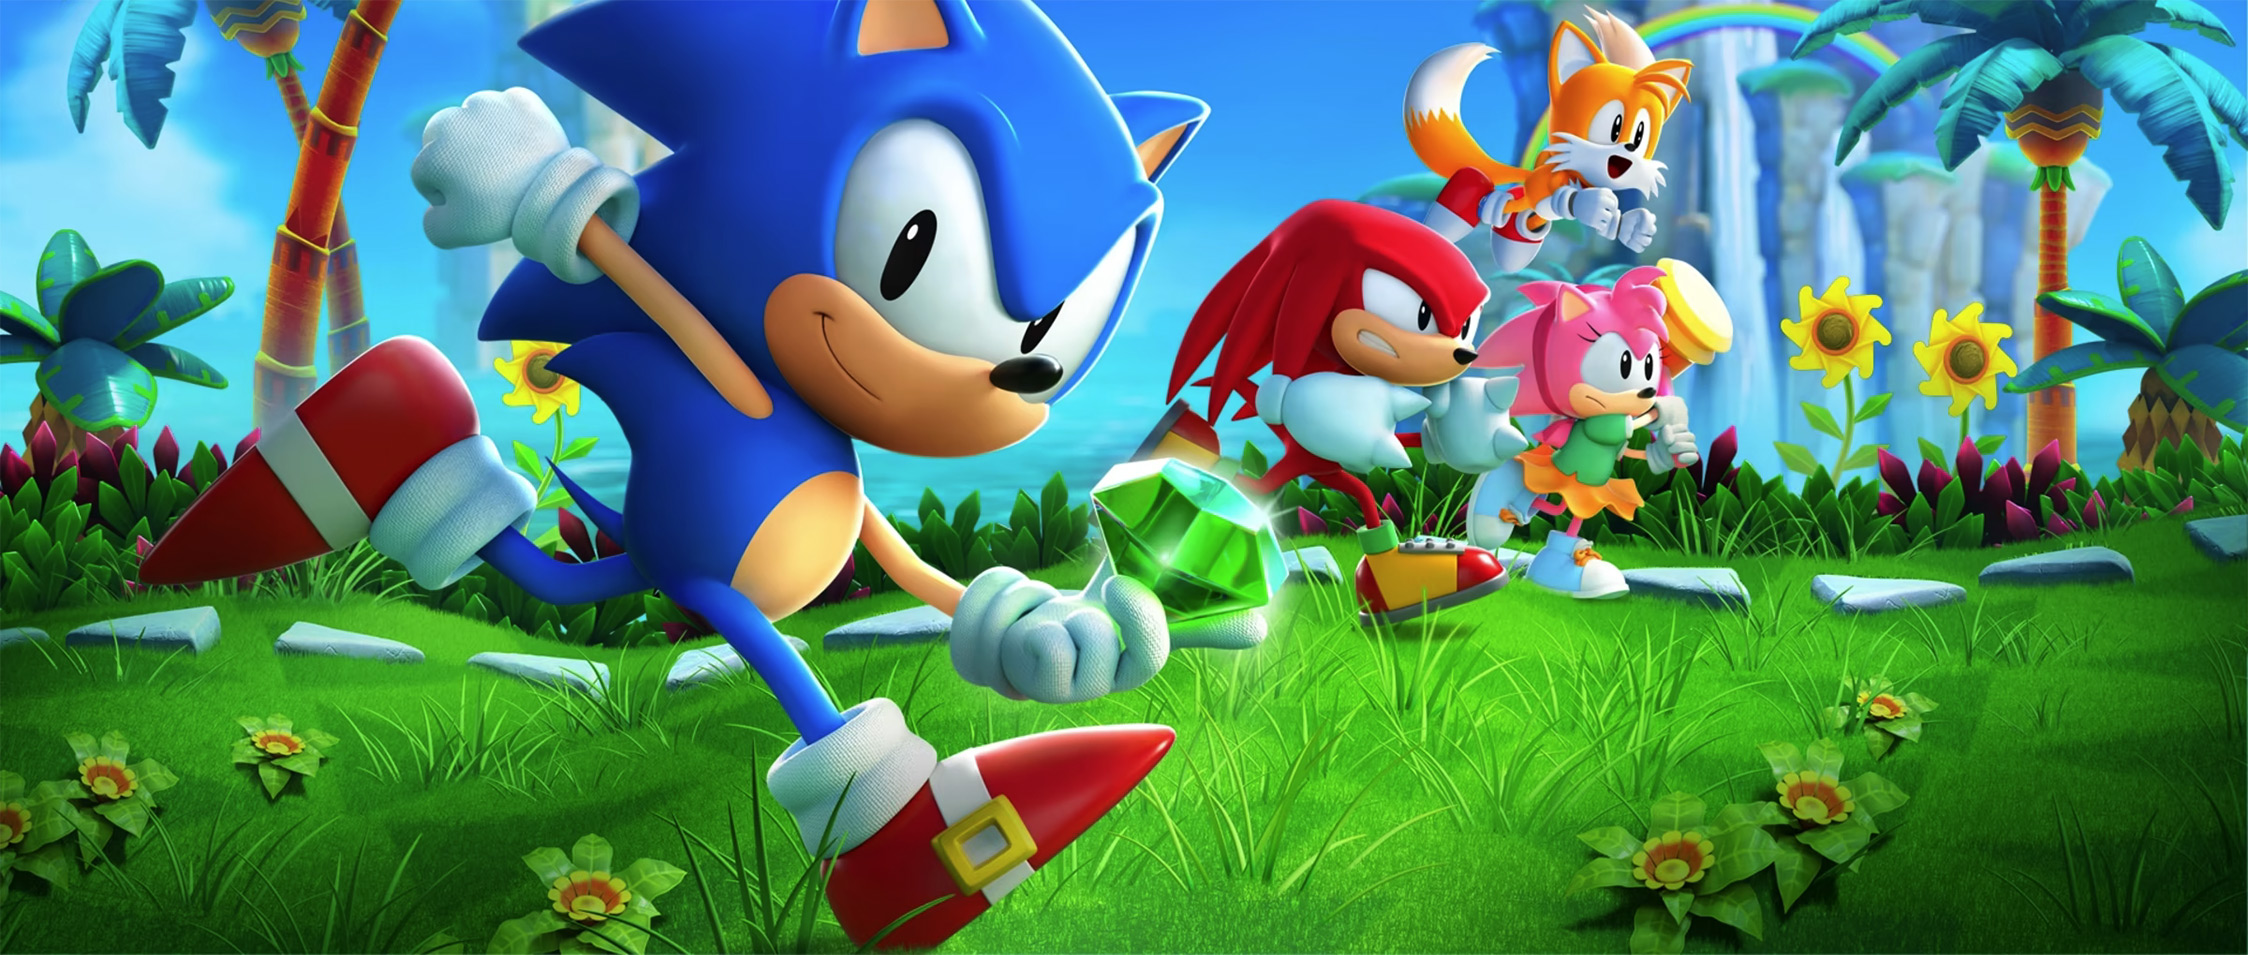 Twenty years of Sonic the Hedgehog - BBC News